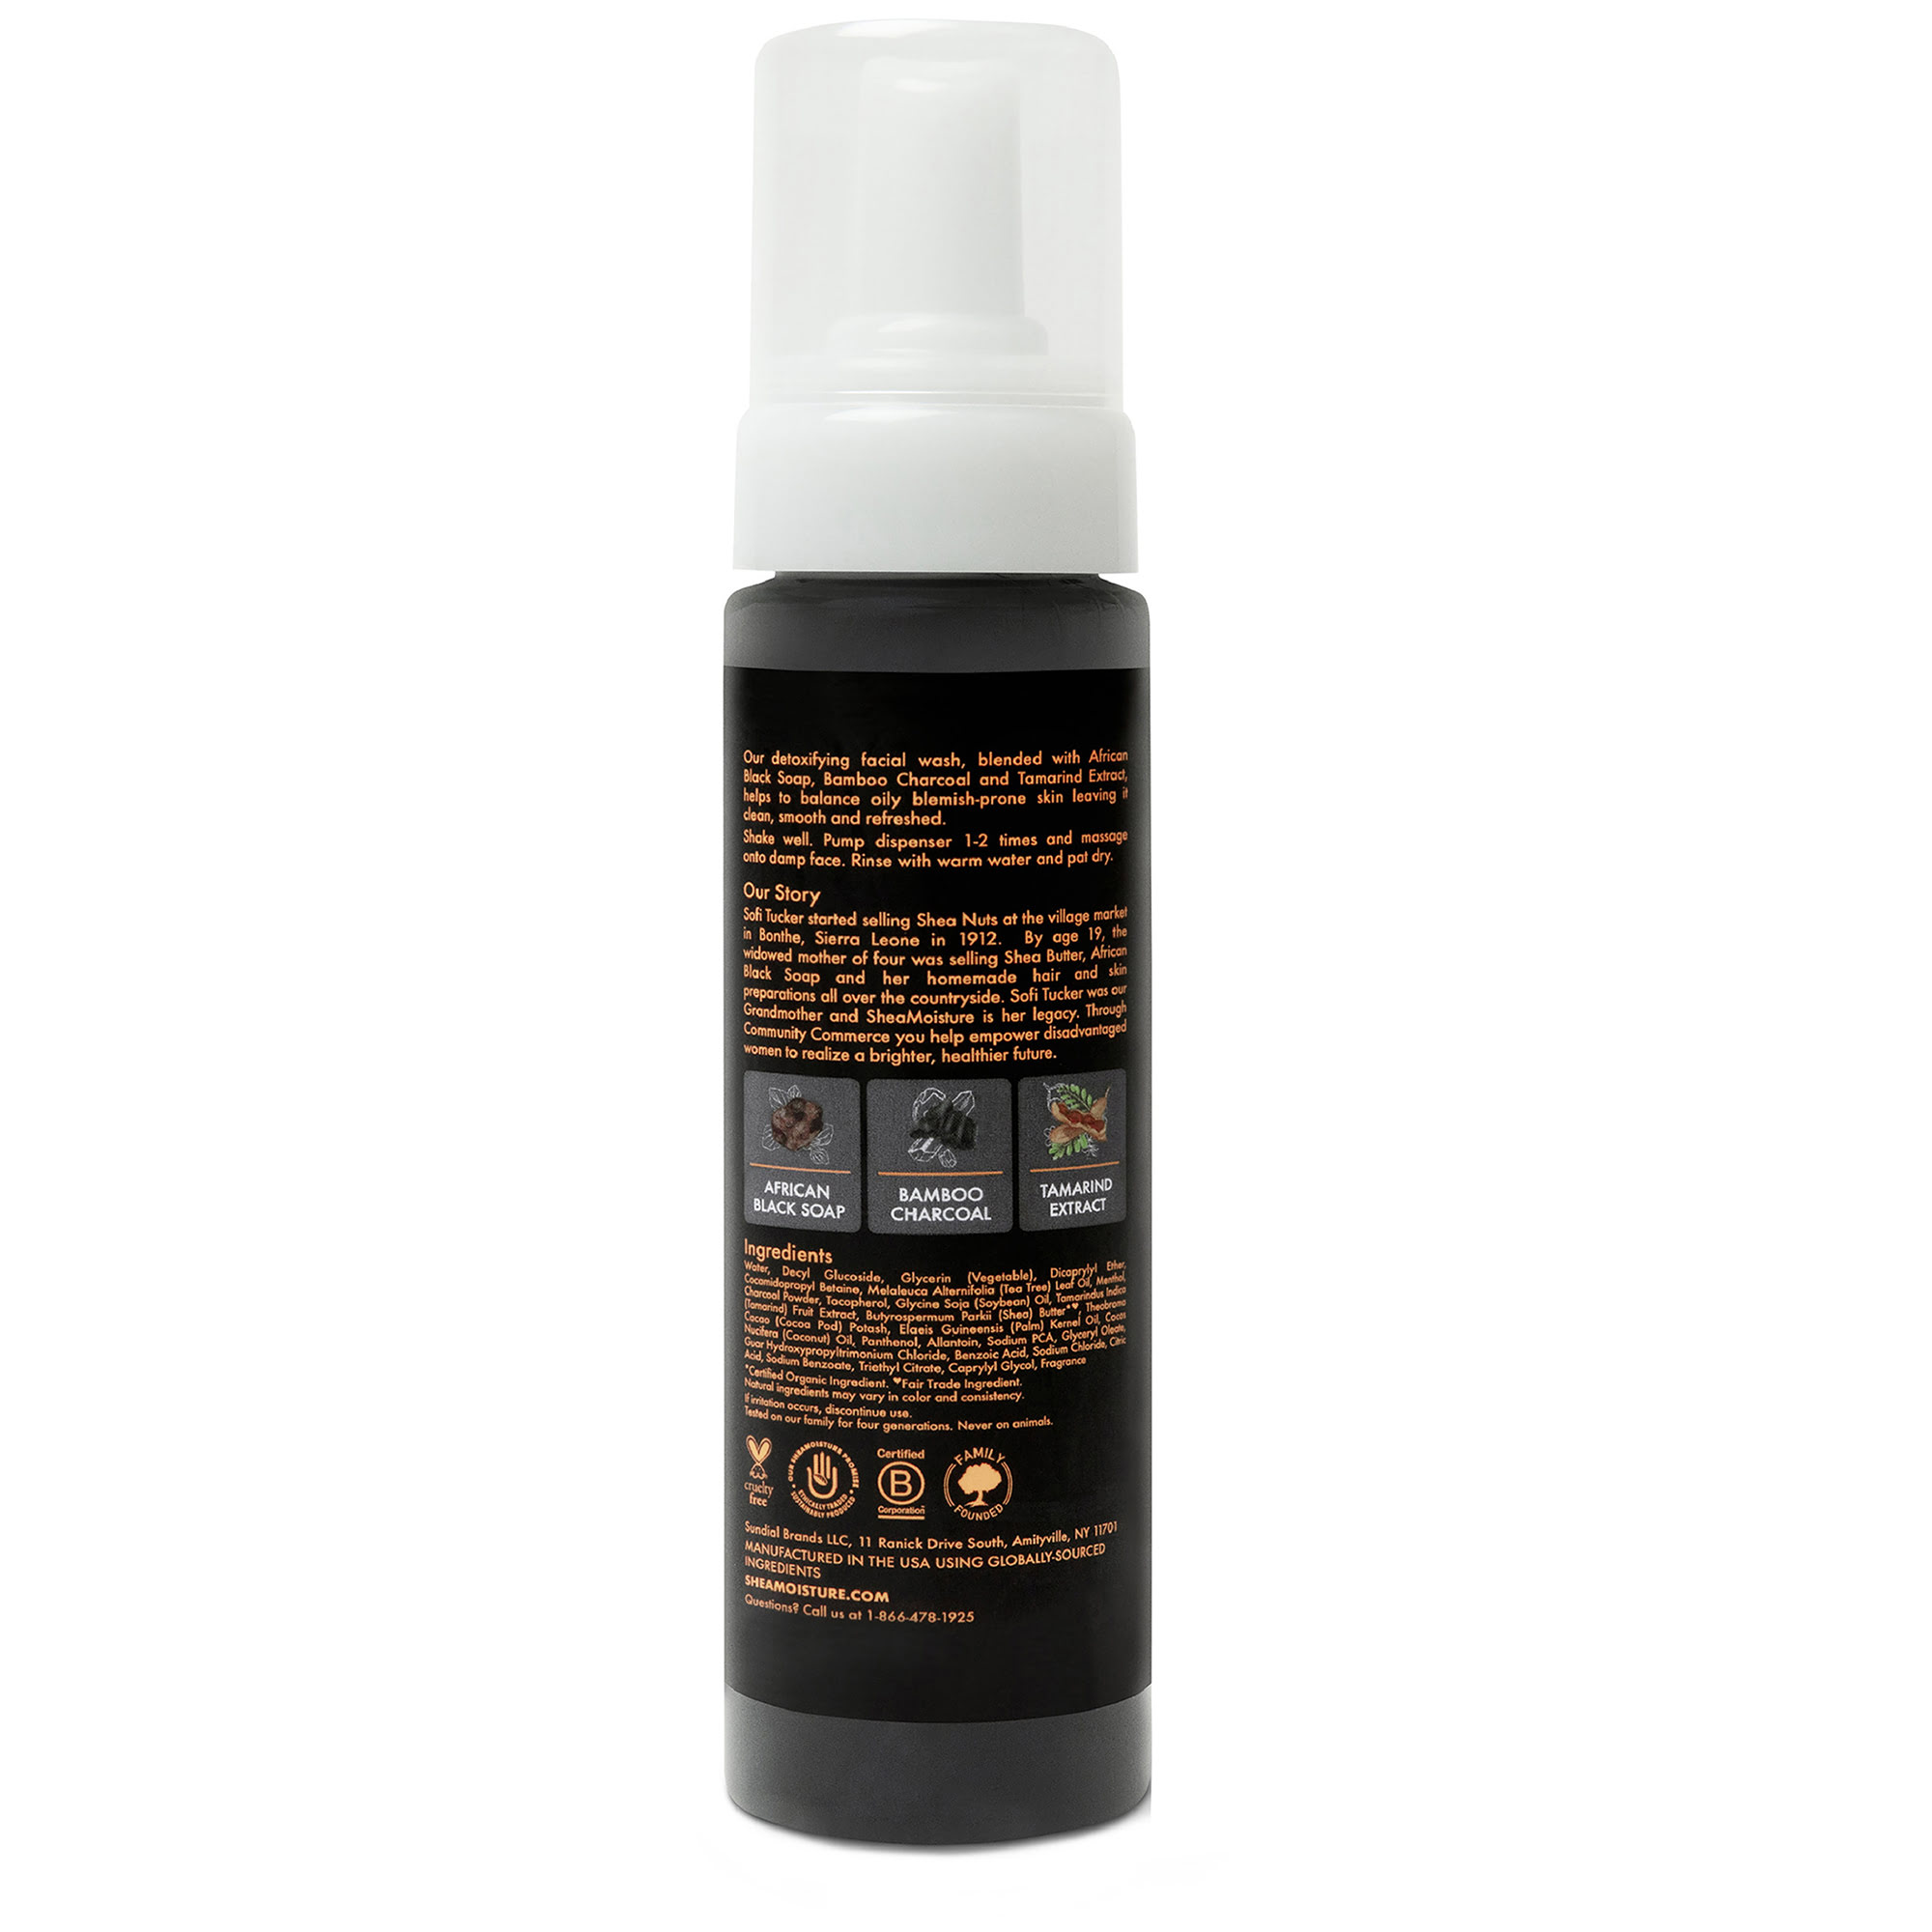 SheaMoisture African Black Soap Bamboo Charcoal Detoxifying Foaming Face Wash, 8 fl oz - image 2 of 8